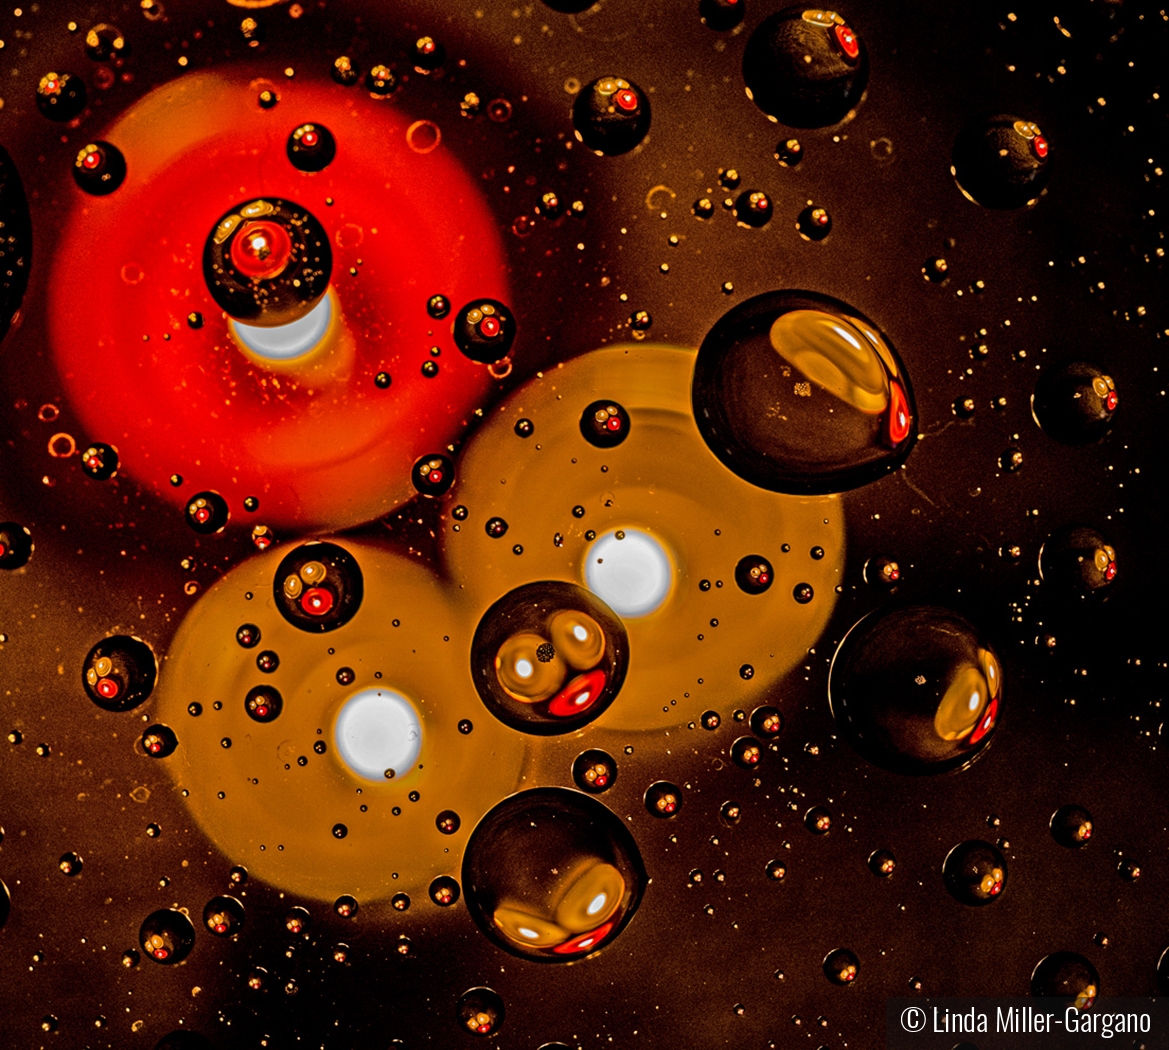 Droplet Universe by Linda Miller-Gargano